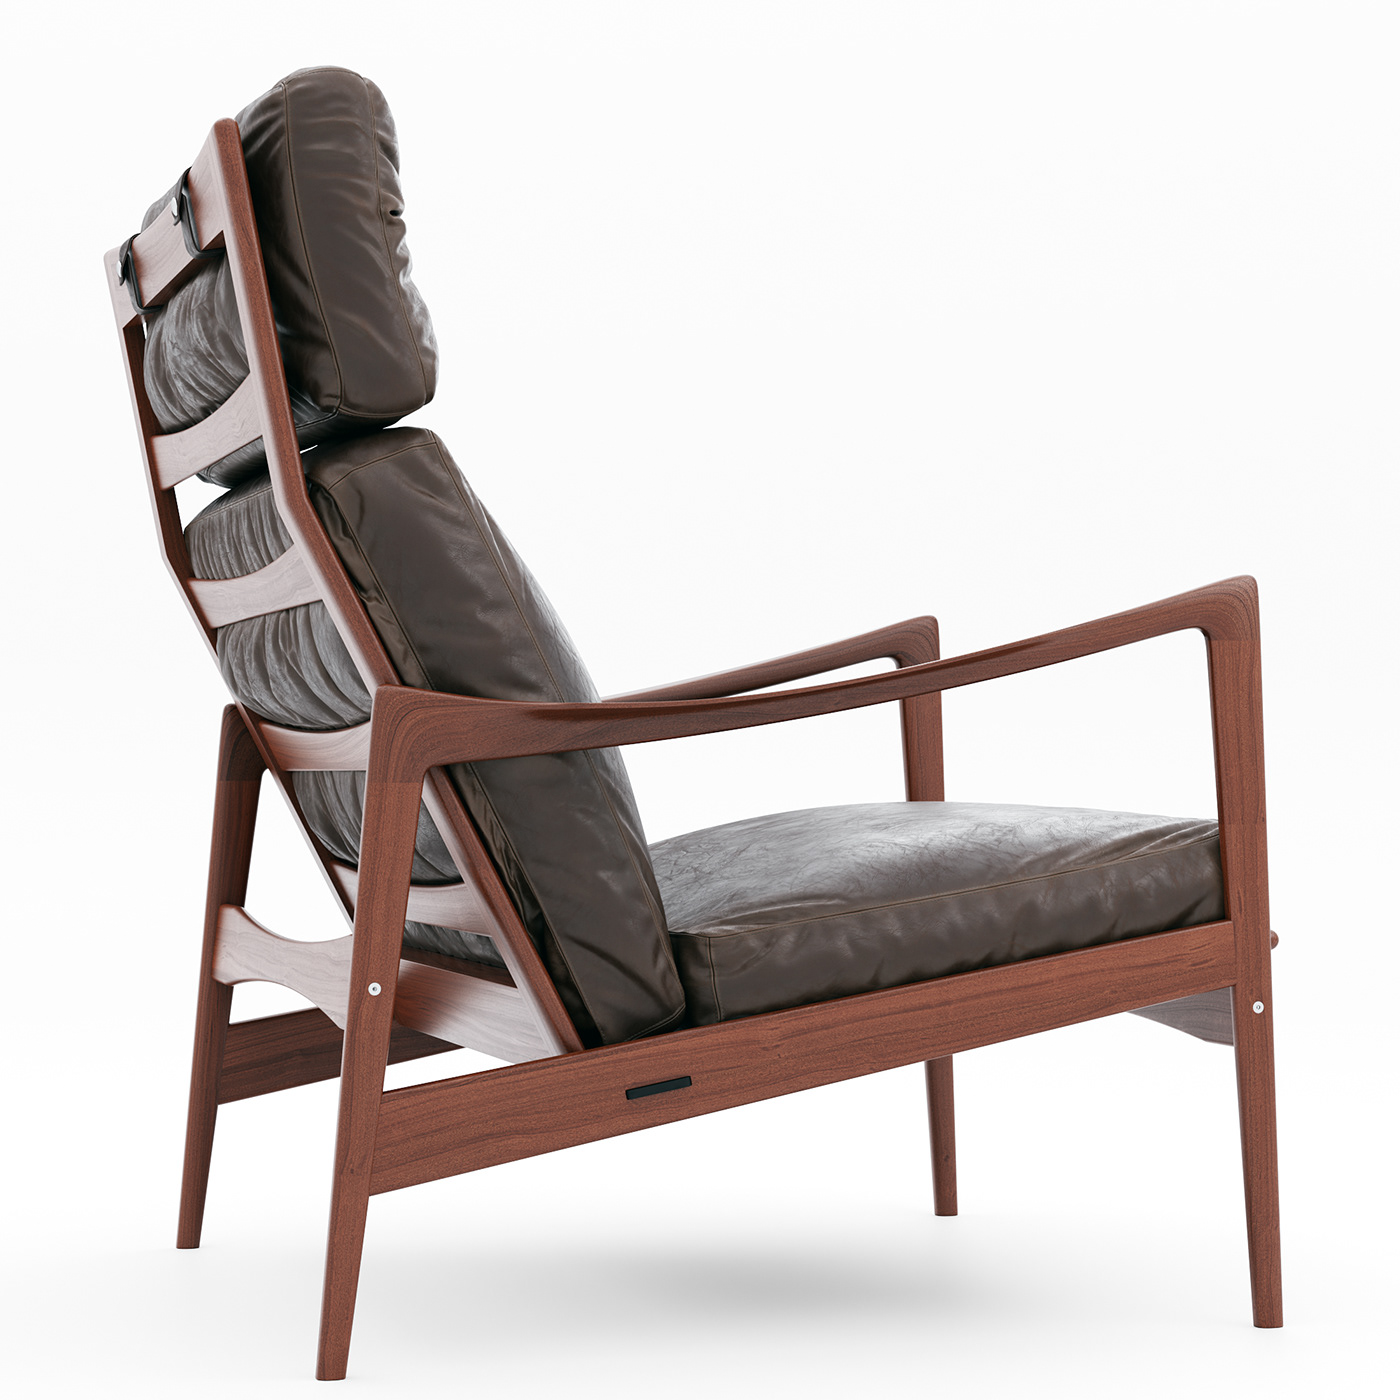 3dsmax chair design modelling